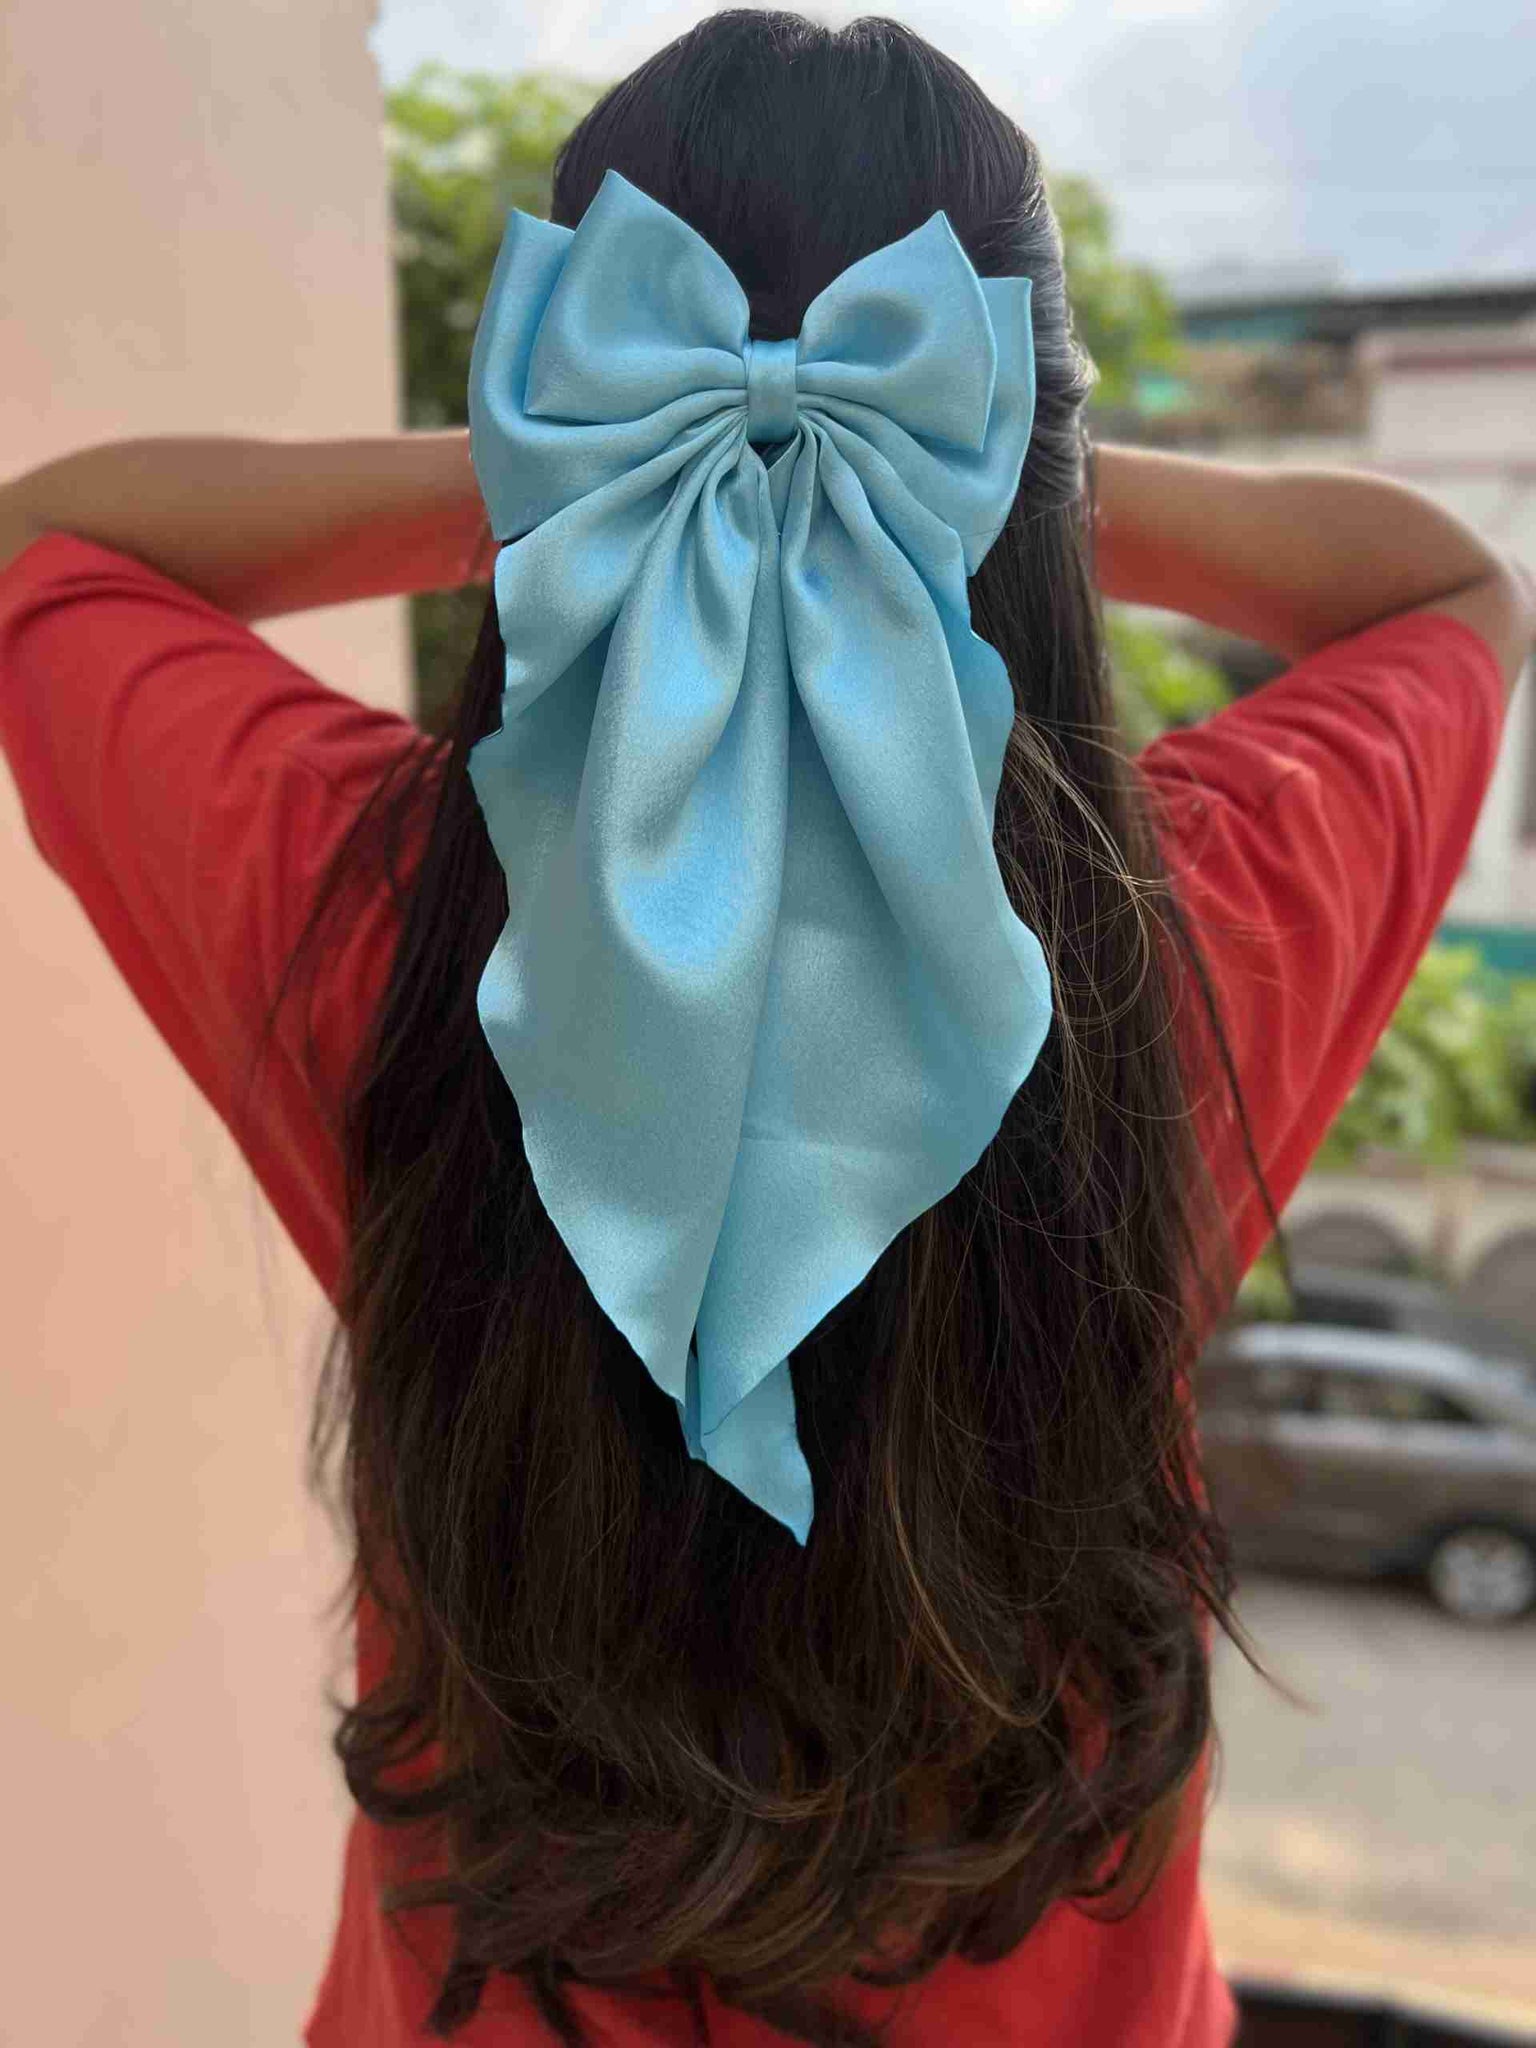 Sky blue ruffle bow